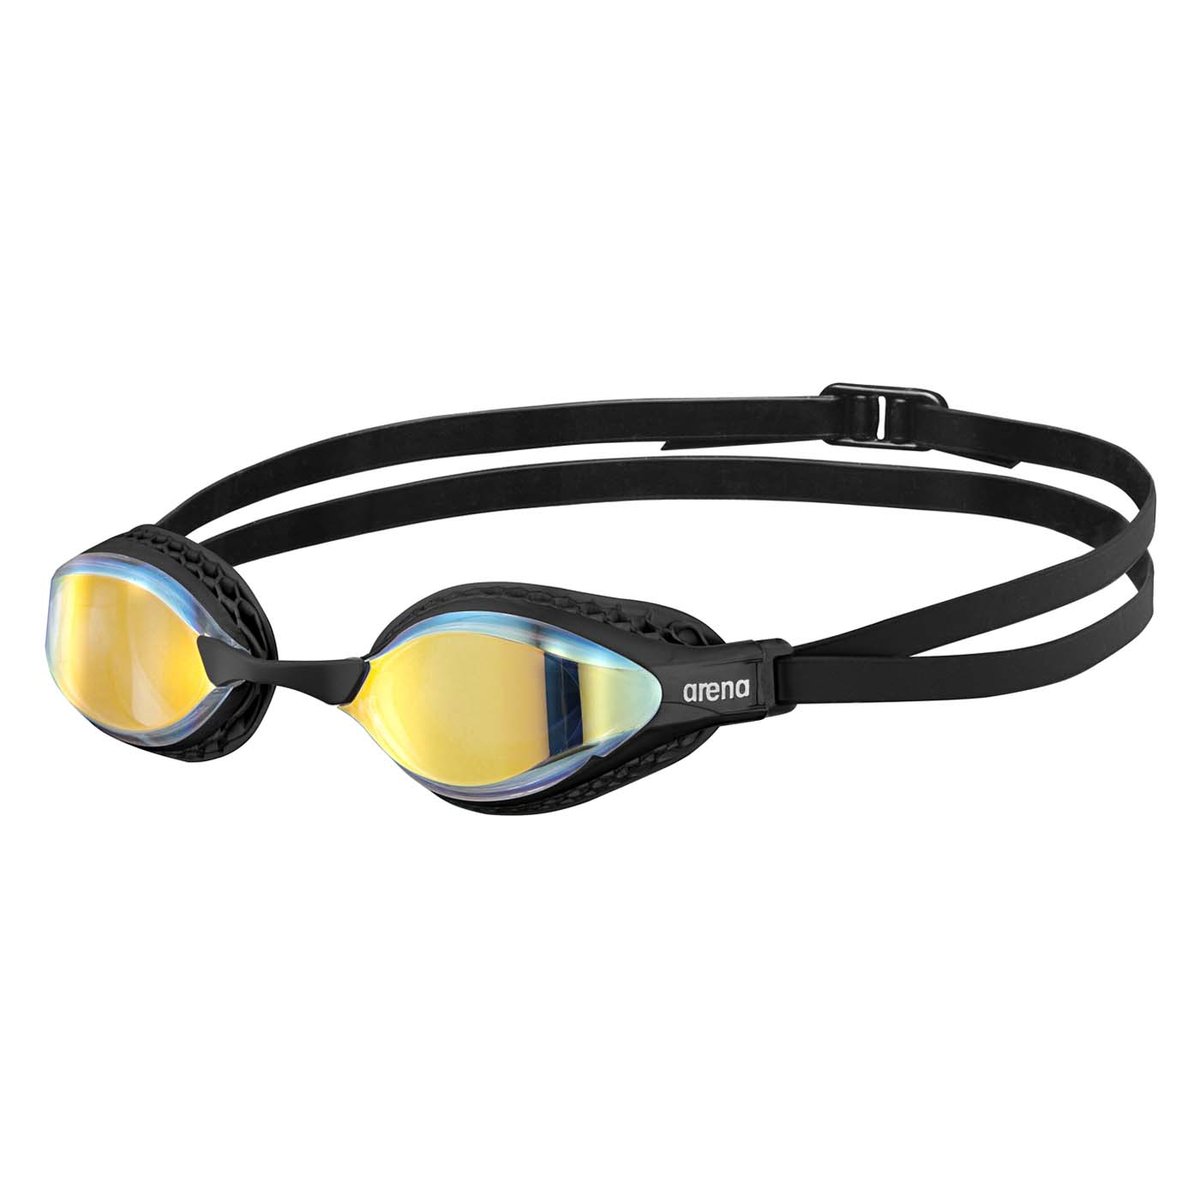 Arena Airspeed Mirror Okulary pływackie, yellow copper/black 2020 Okulary do pływania 3151-200-0